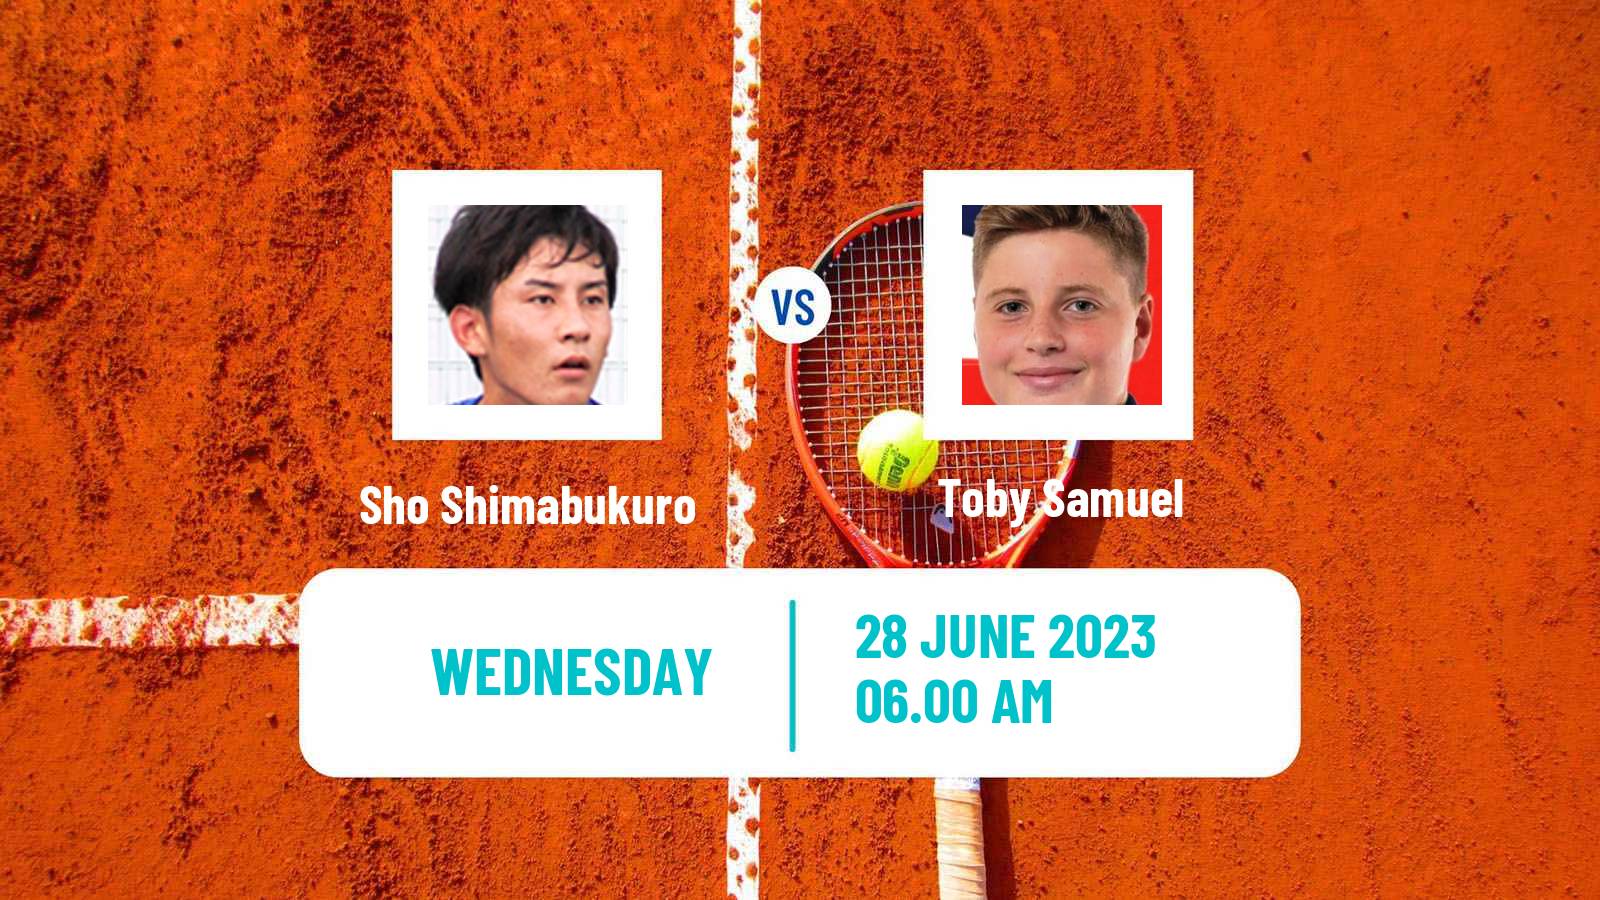 Tennis ATP Wimbledon Sho Shimabukuro - Toby Samuel